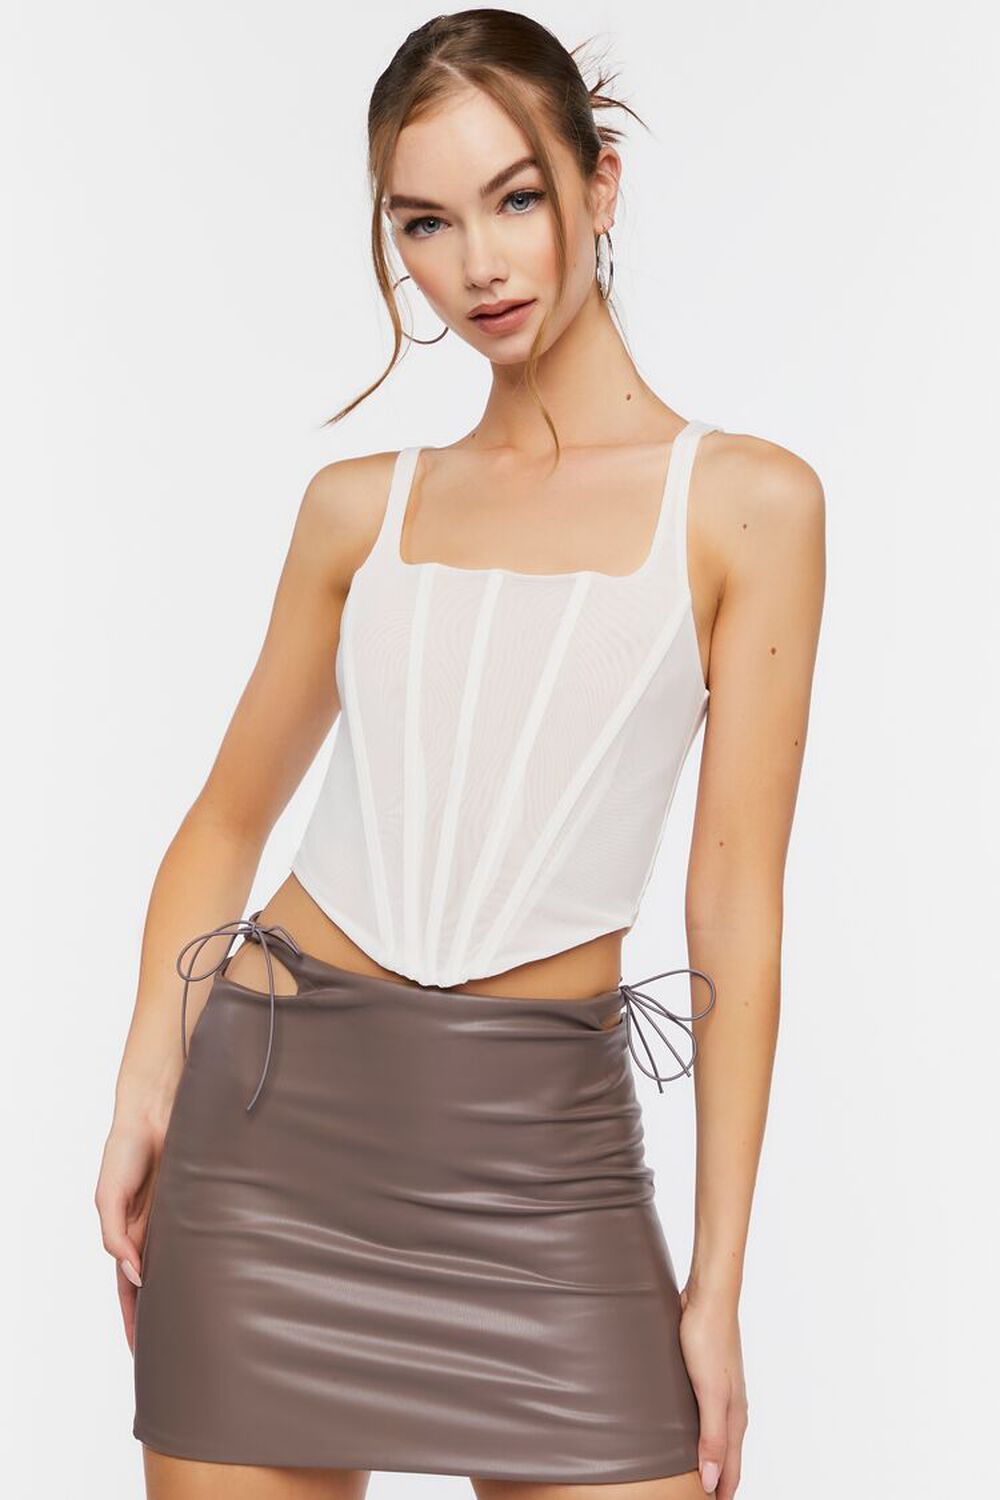 SHIITAKE Faux Leather Cutout Mini Skirt, image 1